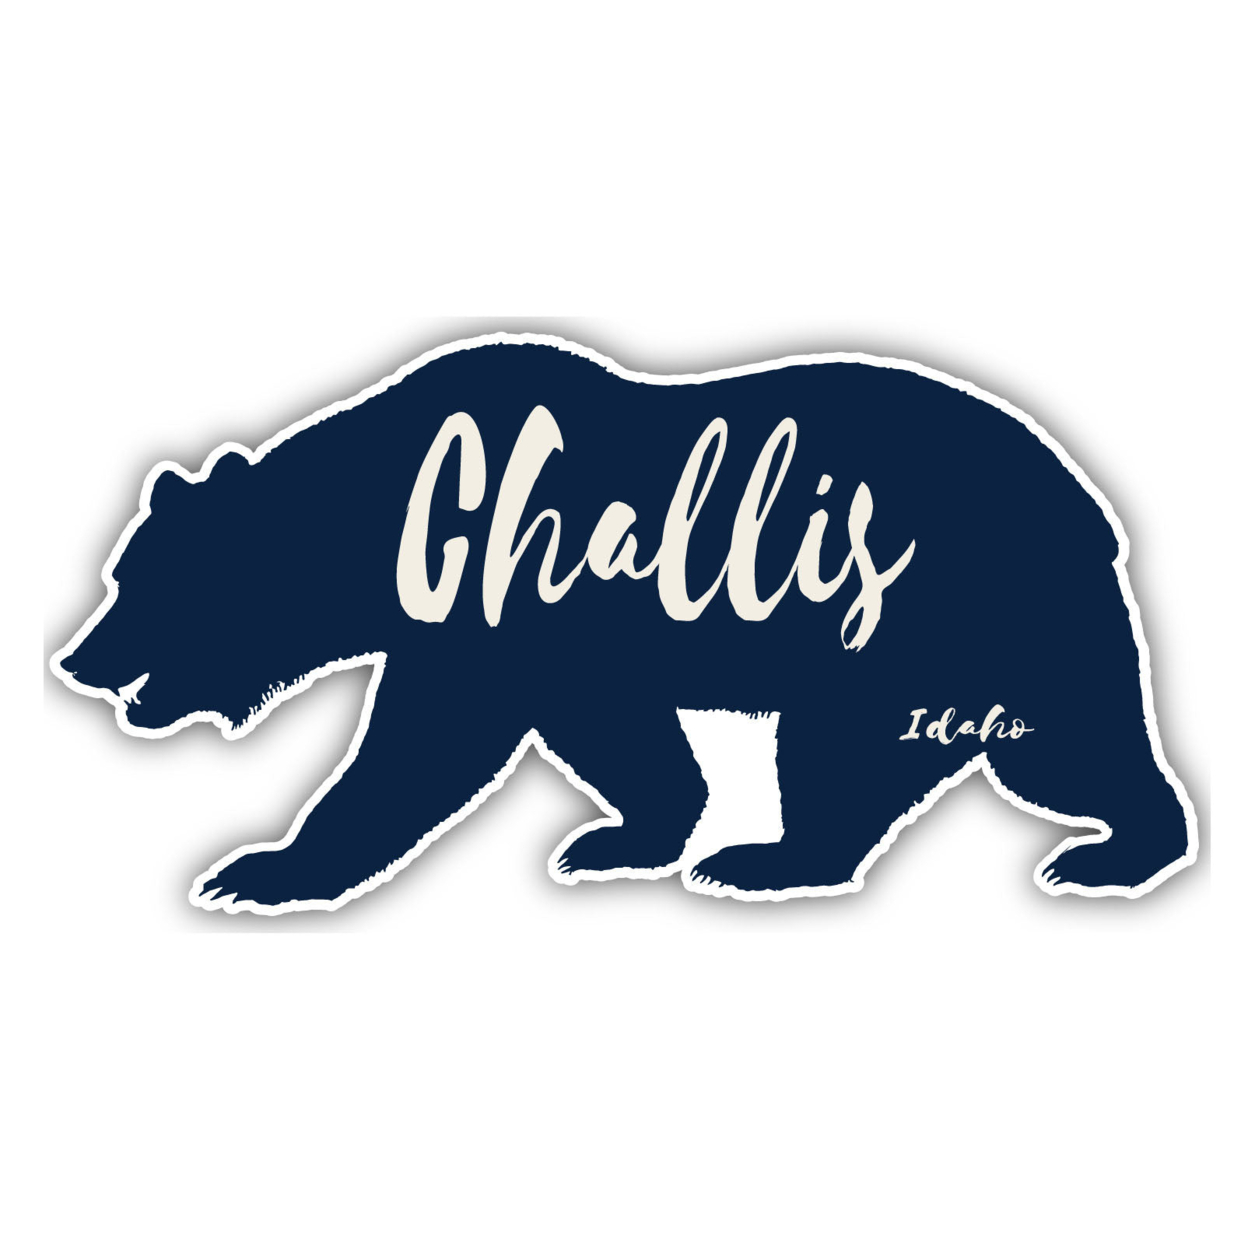 Challis Idaho Souvenir Decorative Stickers (Choose Theme And Size) - Single Unit, 10-Inch, Bear